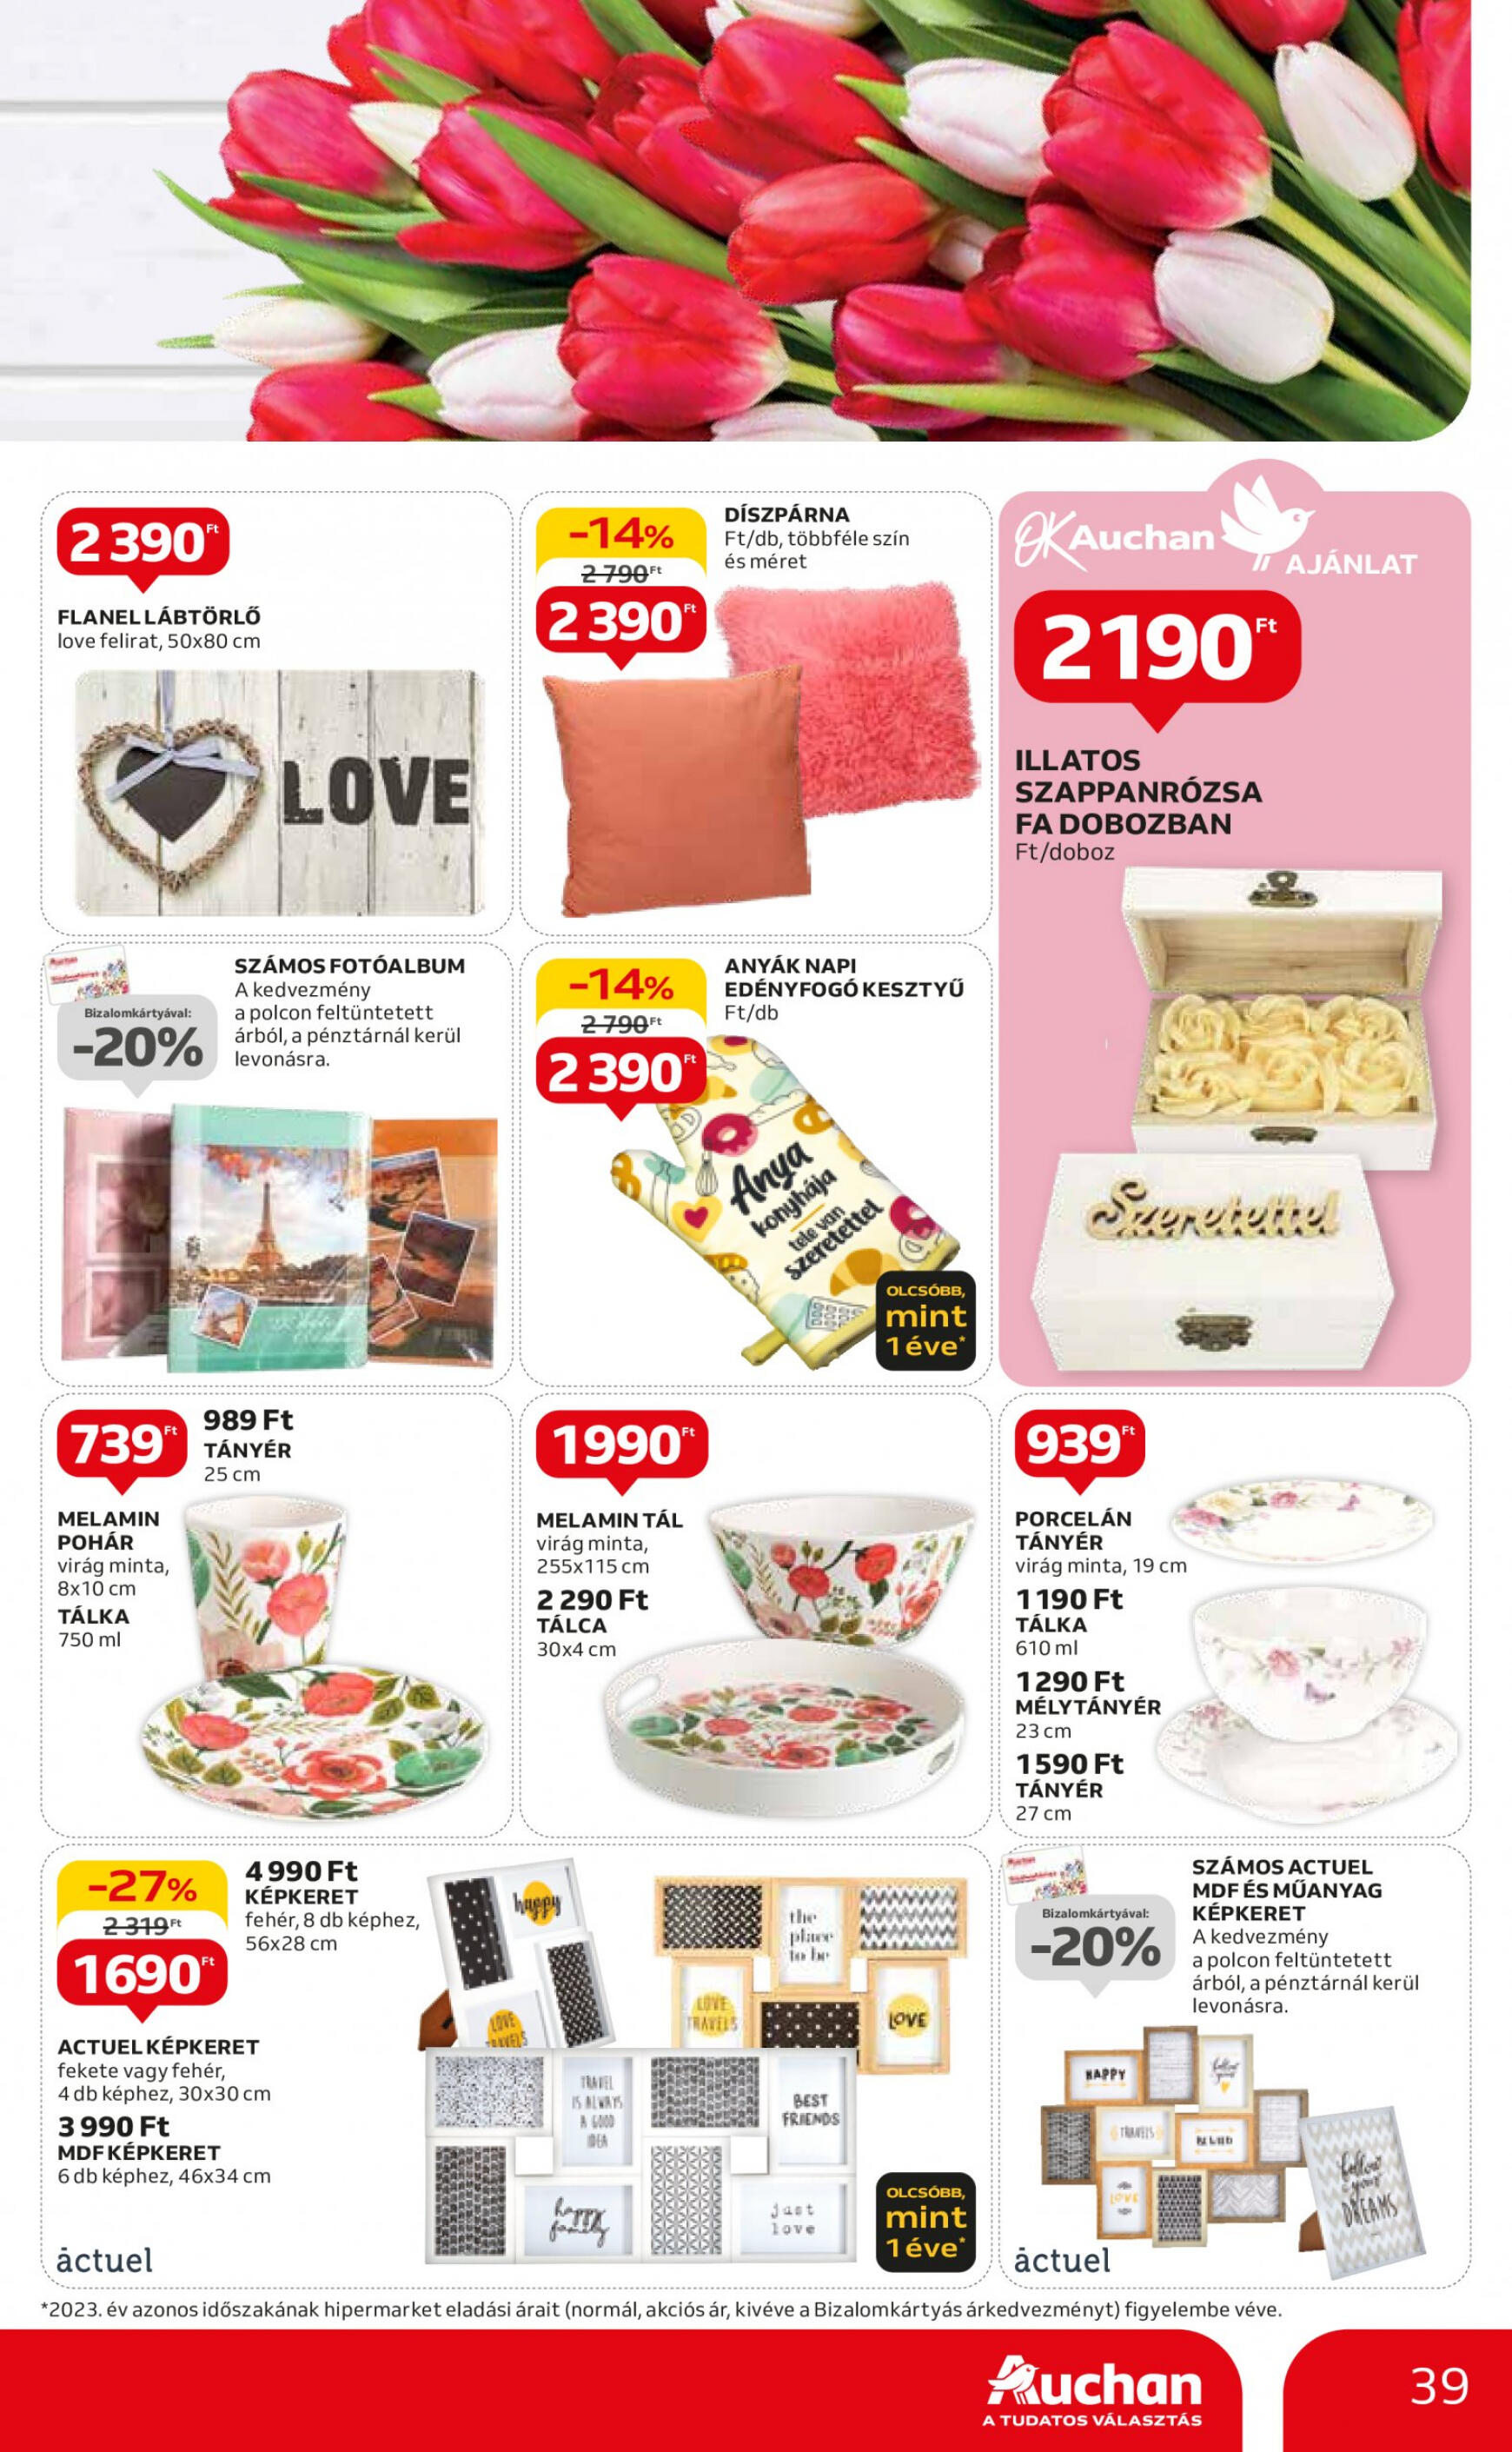 auchan - Aktuális újság Auchan 04.25. - 04.30. - page: 39